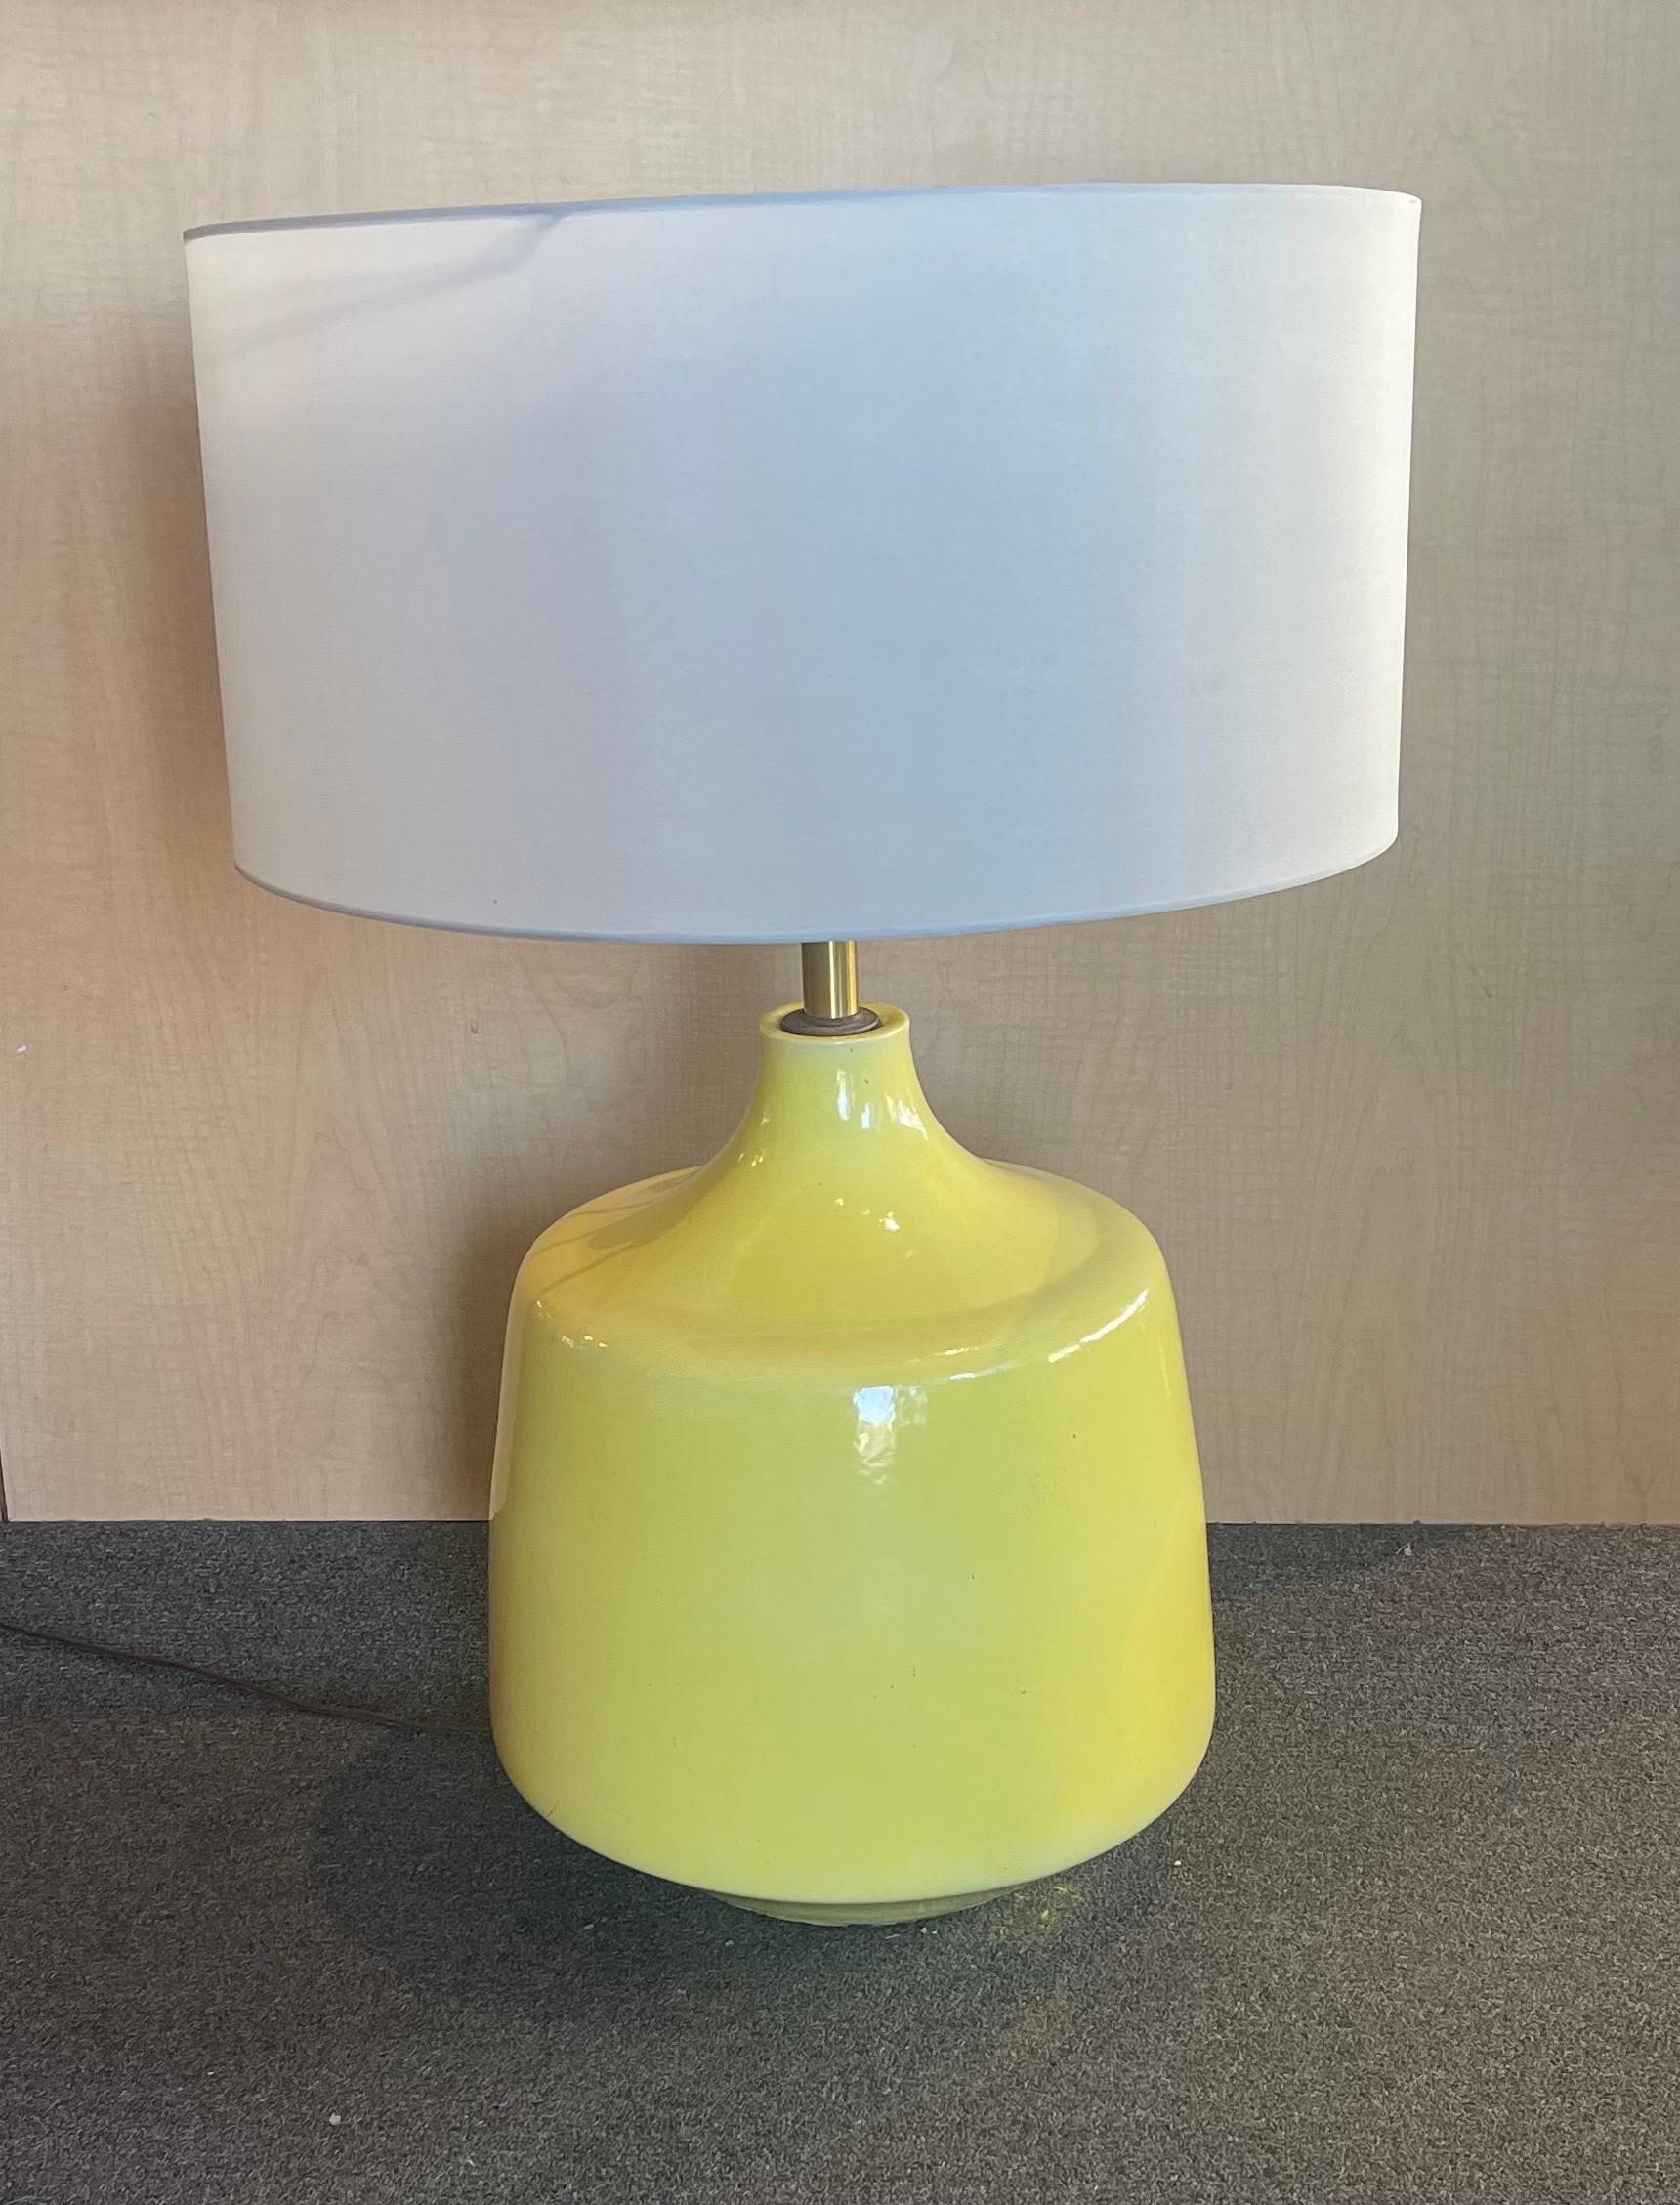 Monumental bright yellow glazed ceramic studio pottery table lamp, circa 1960s. The lamp is massive measuring 13.5